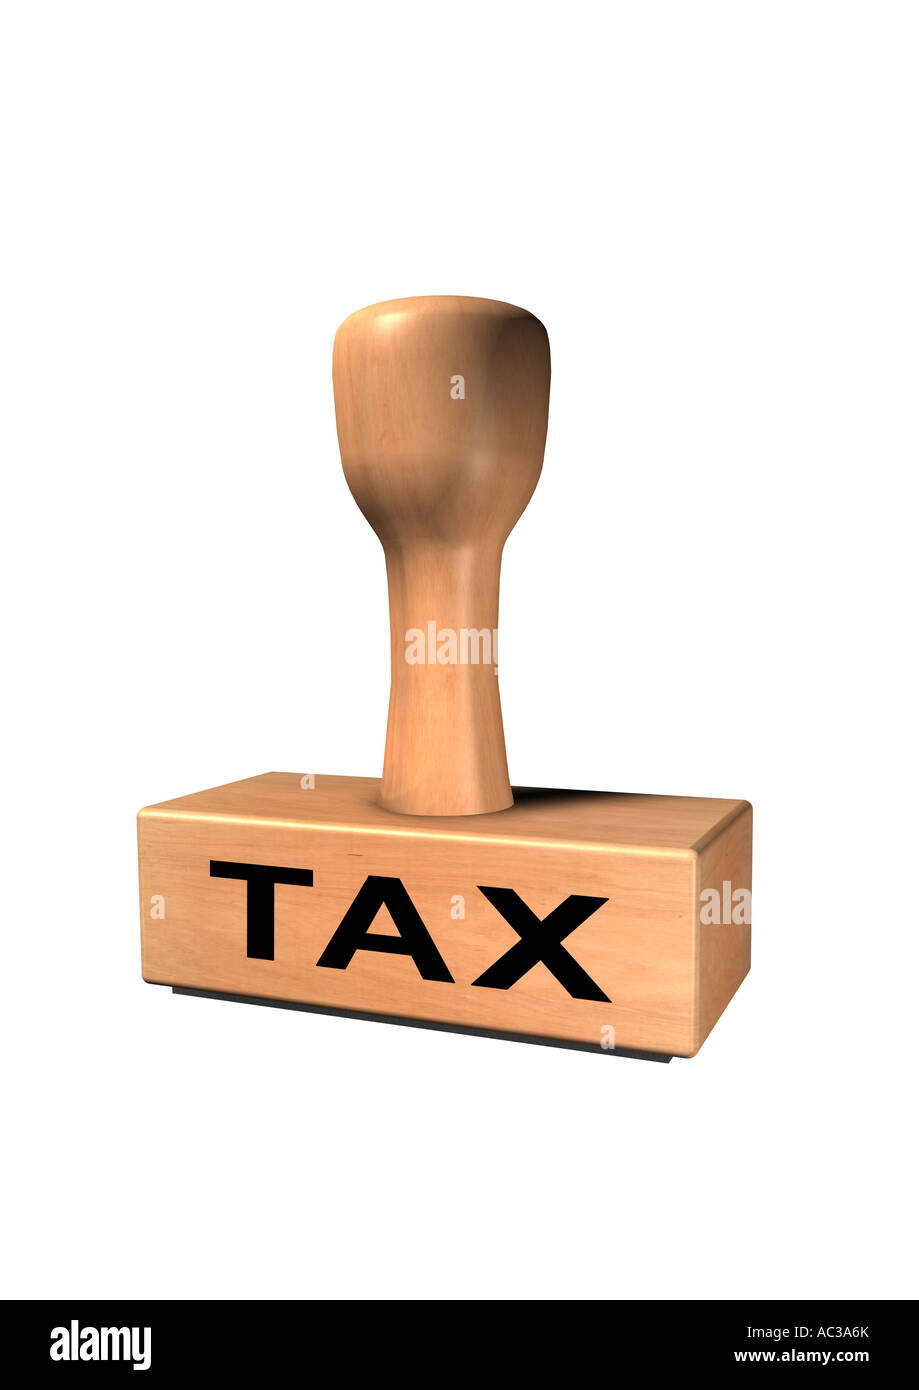 tax stamp Stempel tax Steuer Stock Photo